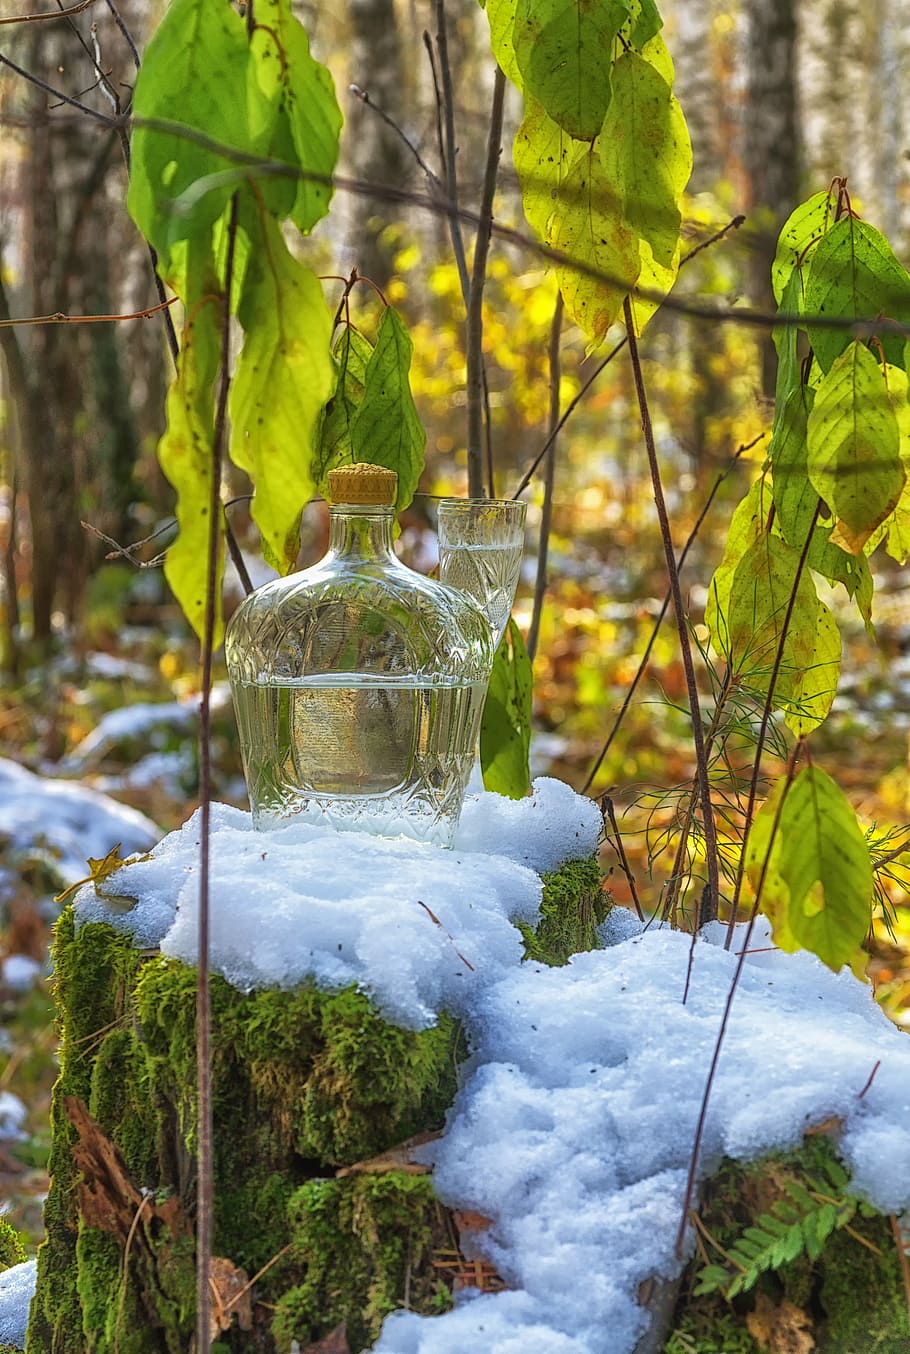 Snow, Still Life, Forest, Trees, autumn, melting snow, melancholia, glass, decanter, nature